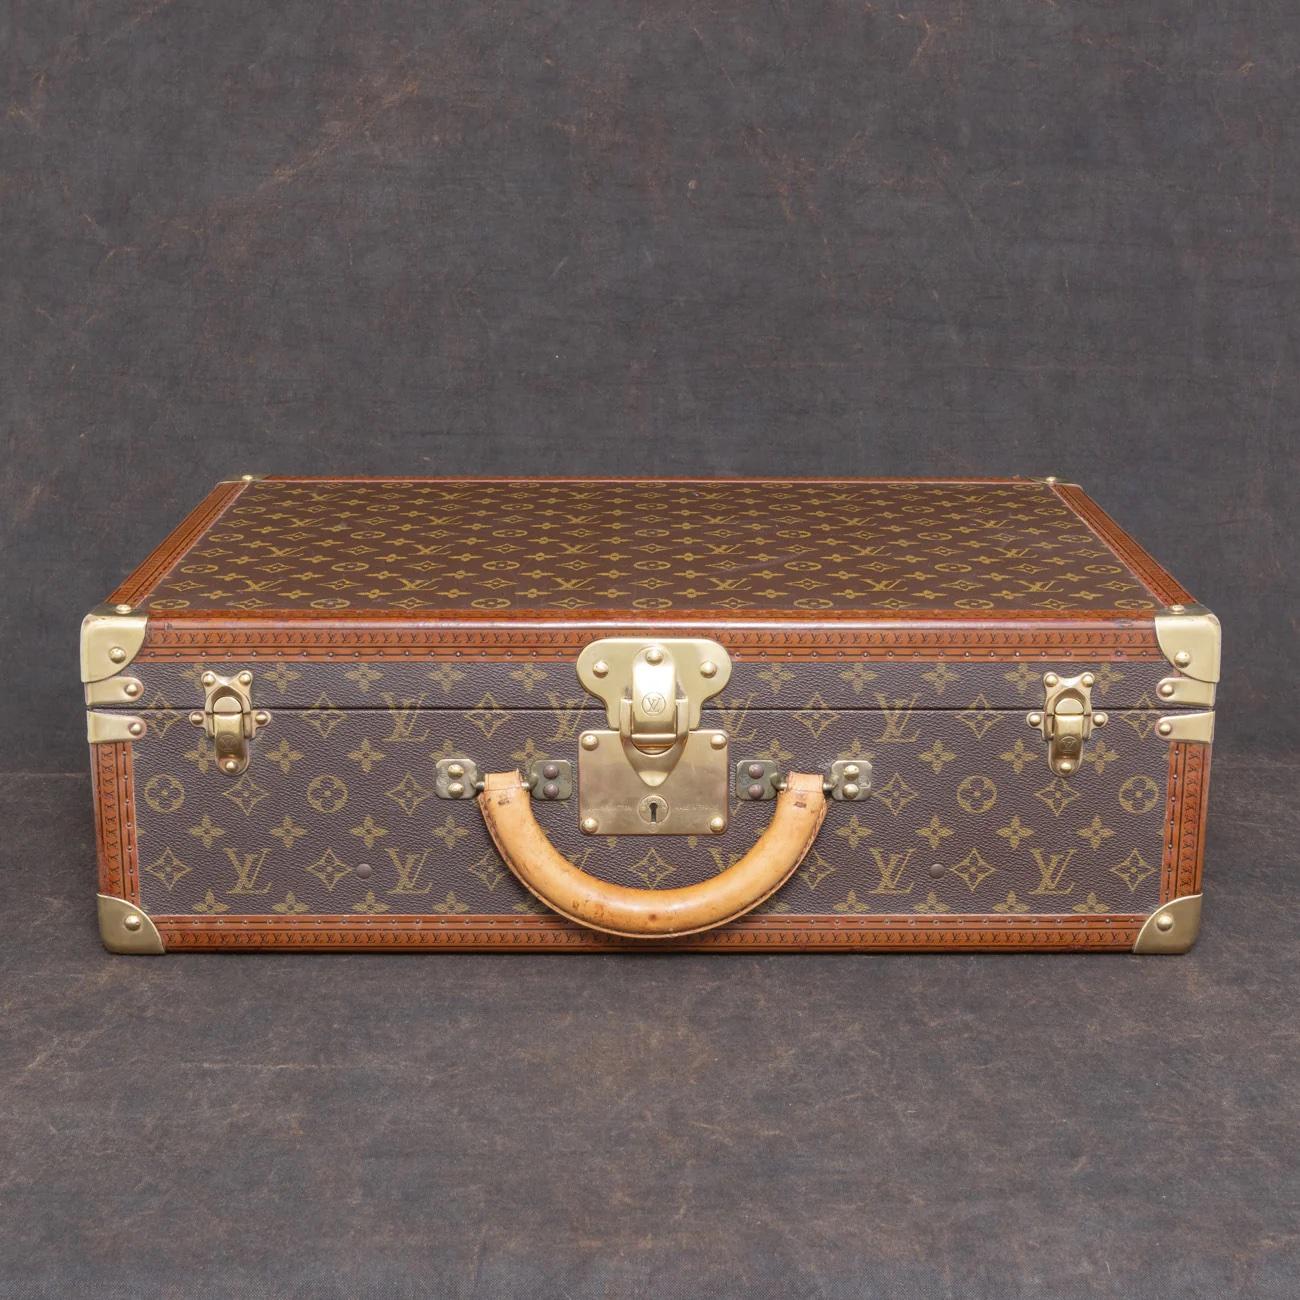 Louis Vuitton Monogram Canvas Bisten 70 Hardsided Suitcase Louis